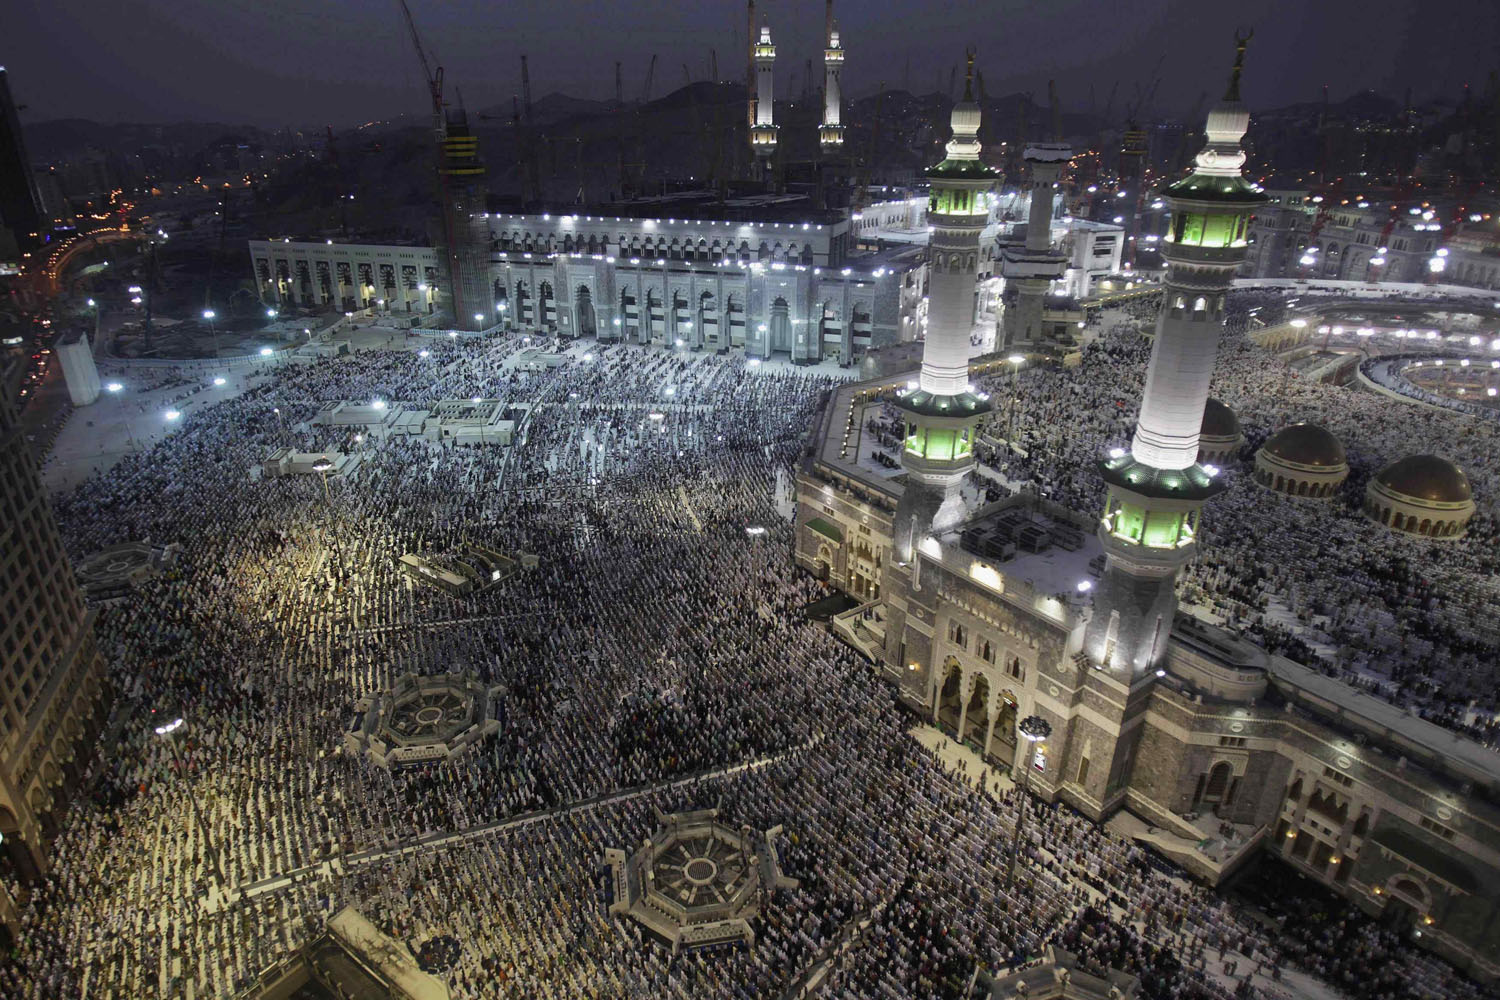 Muslim pilgrims pray at Grand mosque in Mecca, ahead of annual haj pilgrimage